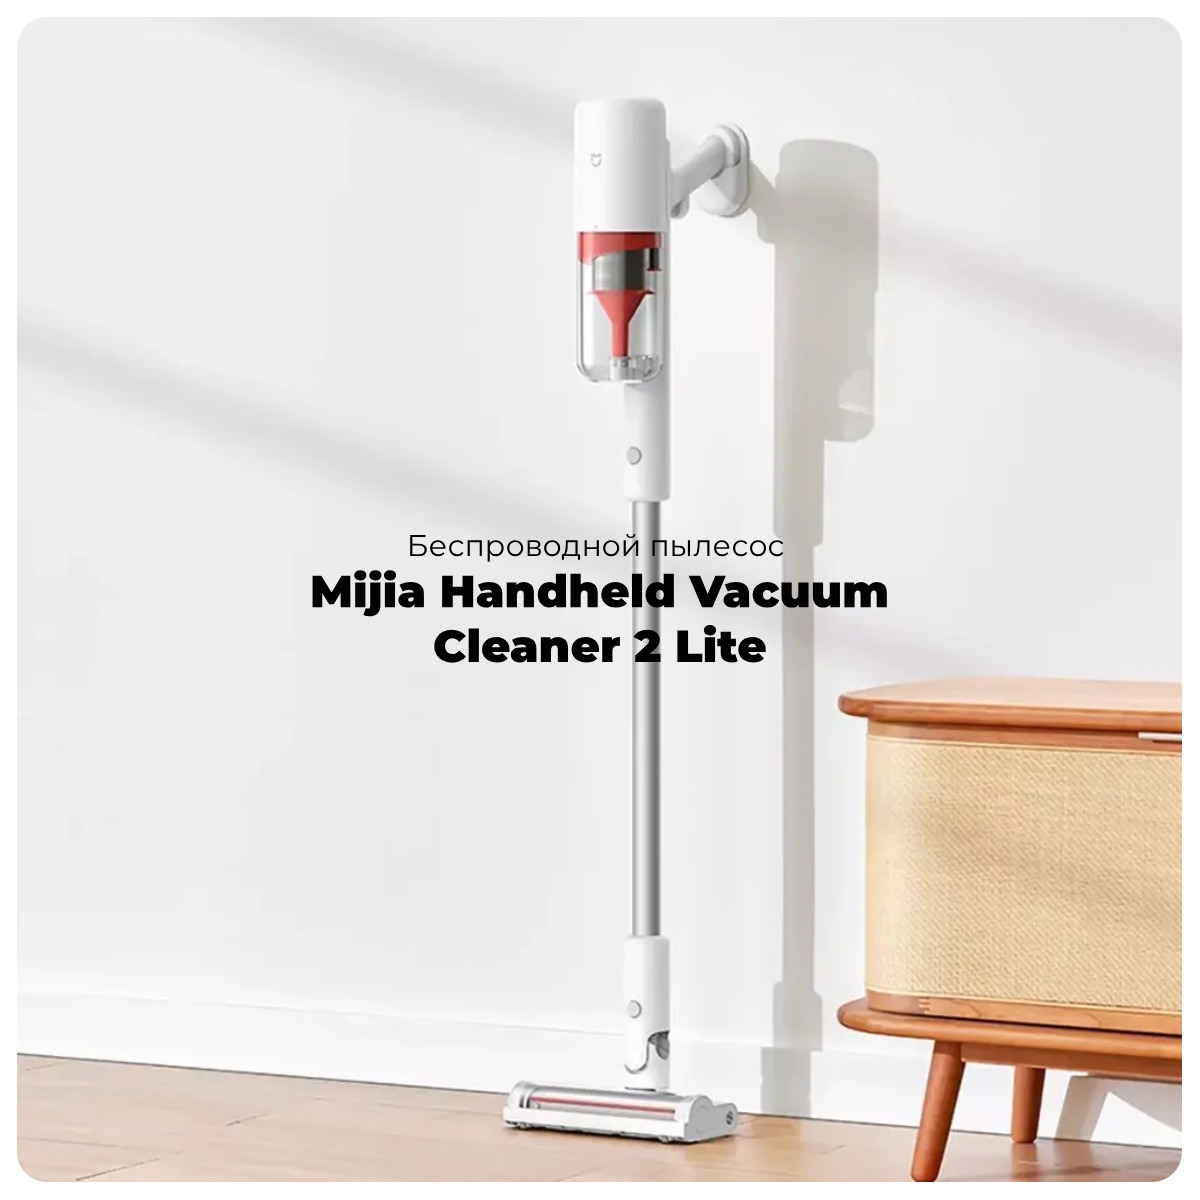 Mijia-Handheld-Vacuum-Cleaner-2-Lite-B204-01